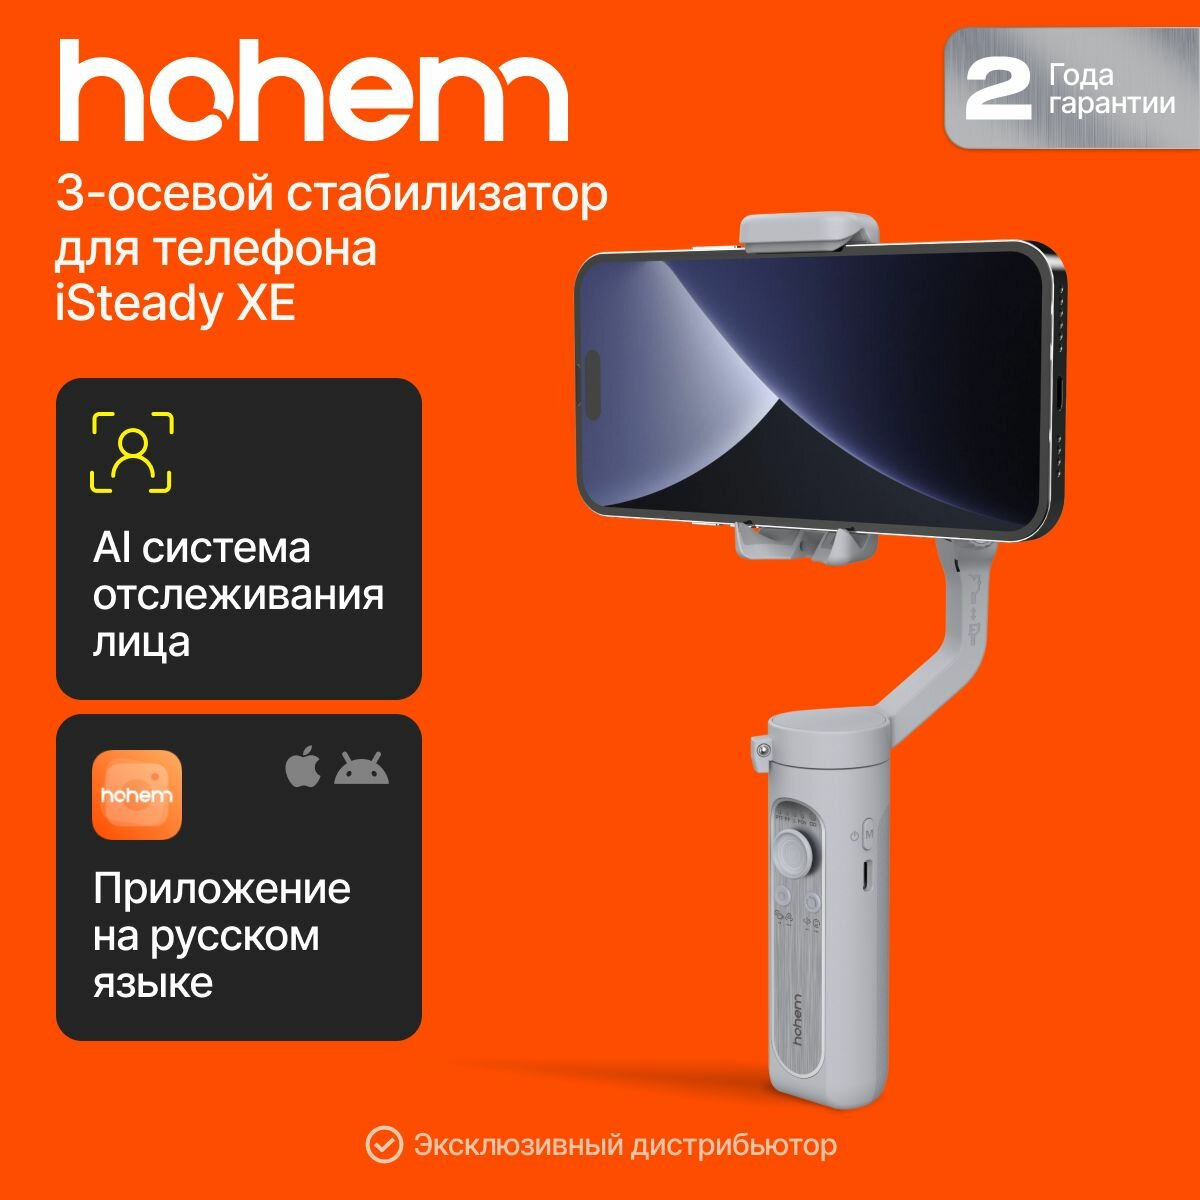 Стабилизатор для телефона Hohem iSteady XE электронный